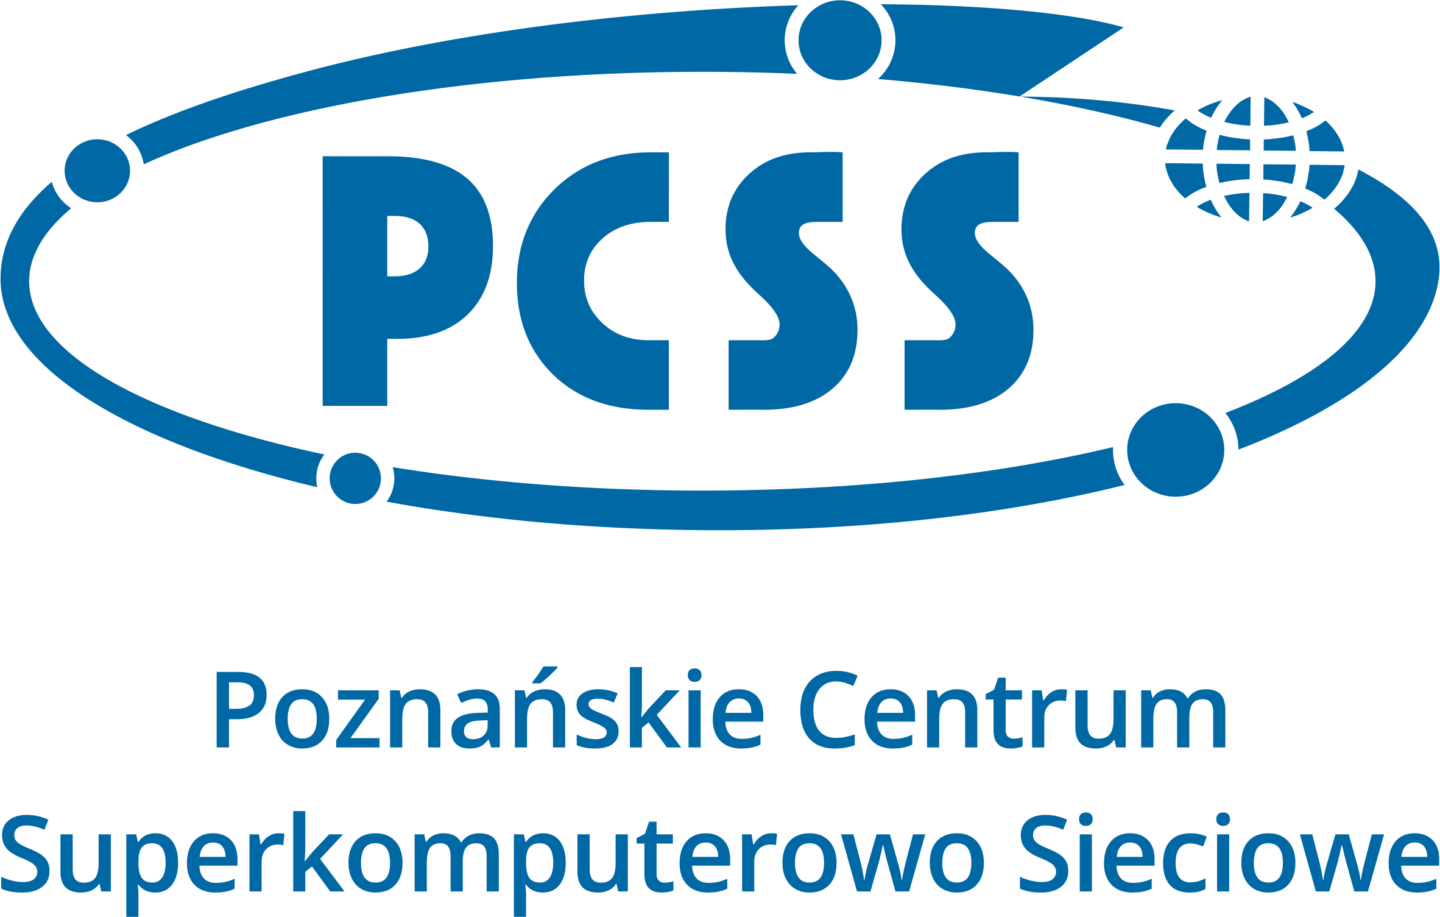 Poznańskie Centrum Superkomputerowo-Sieciowe